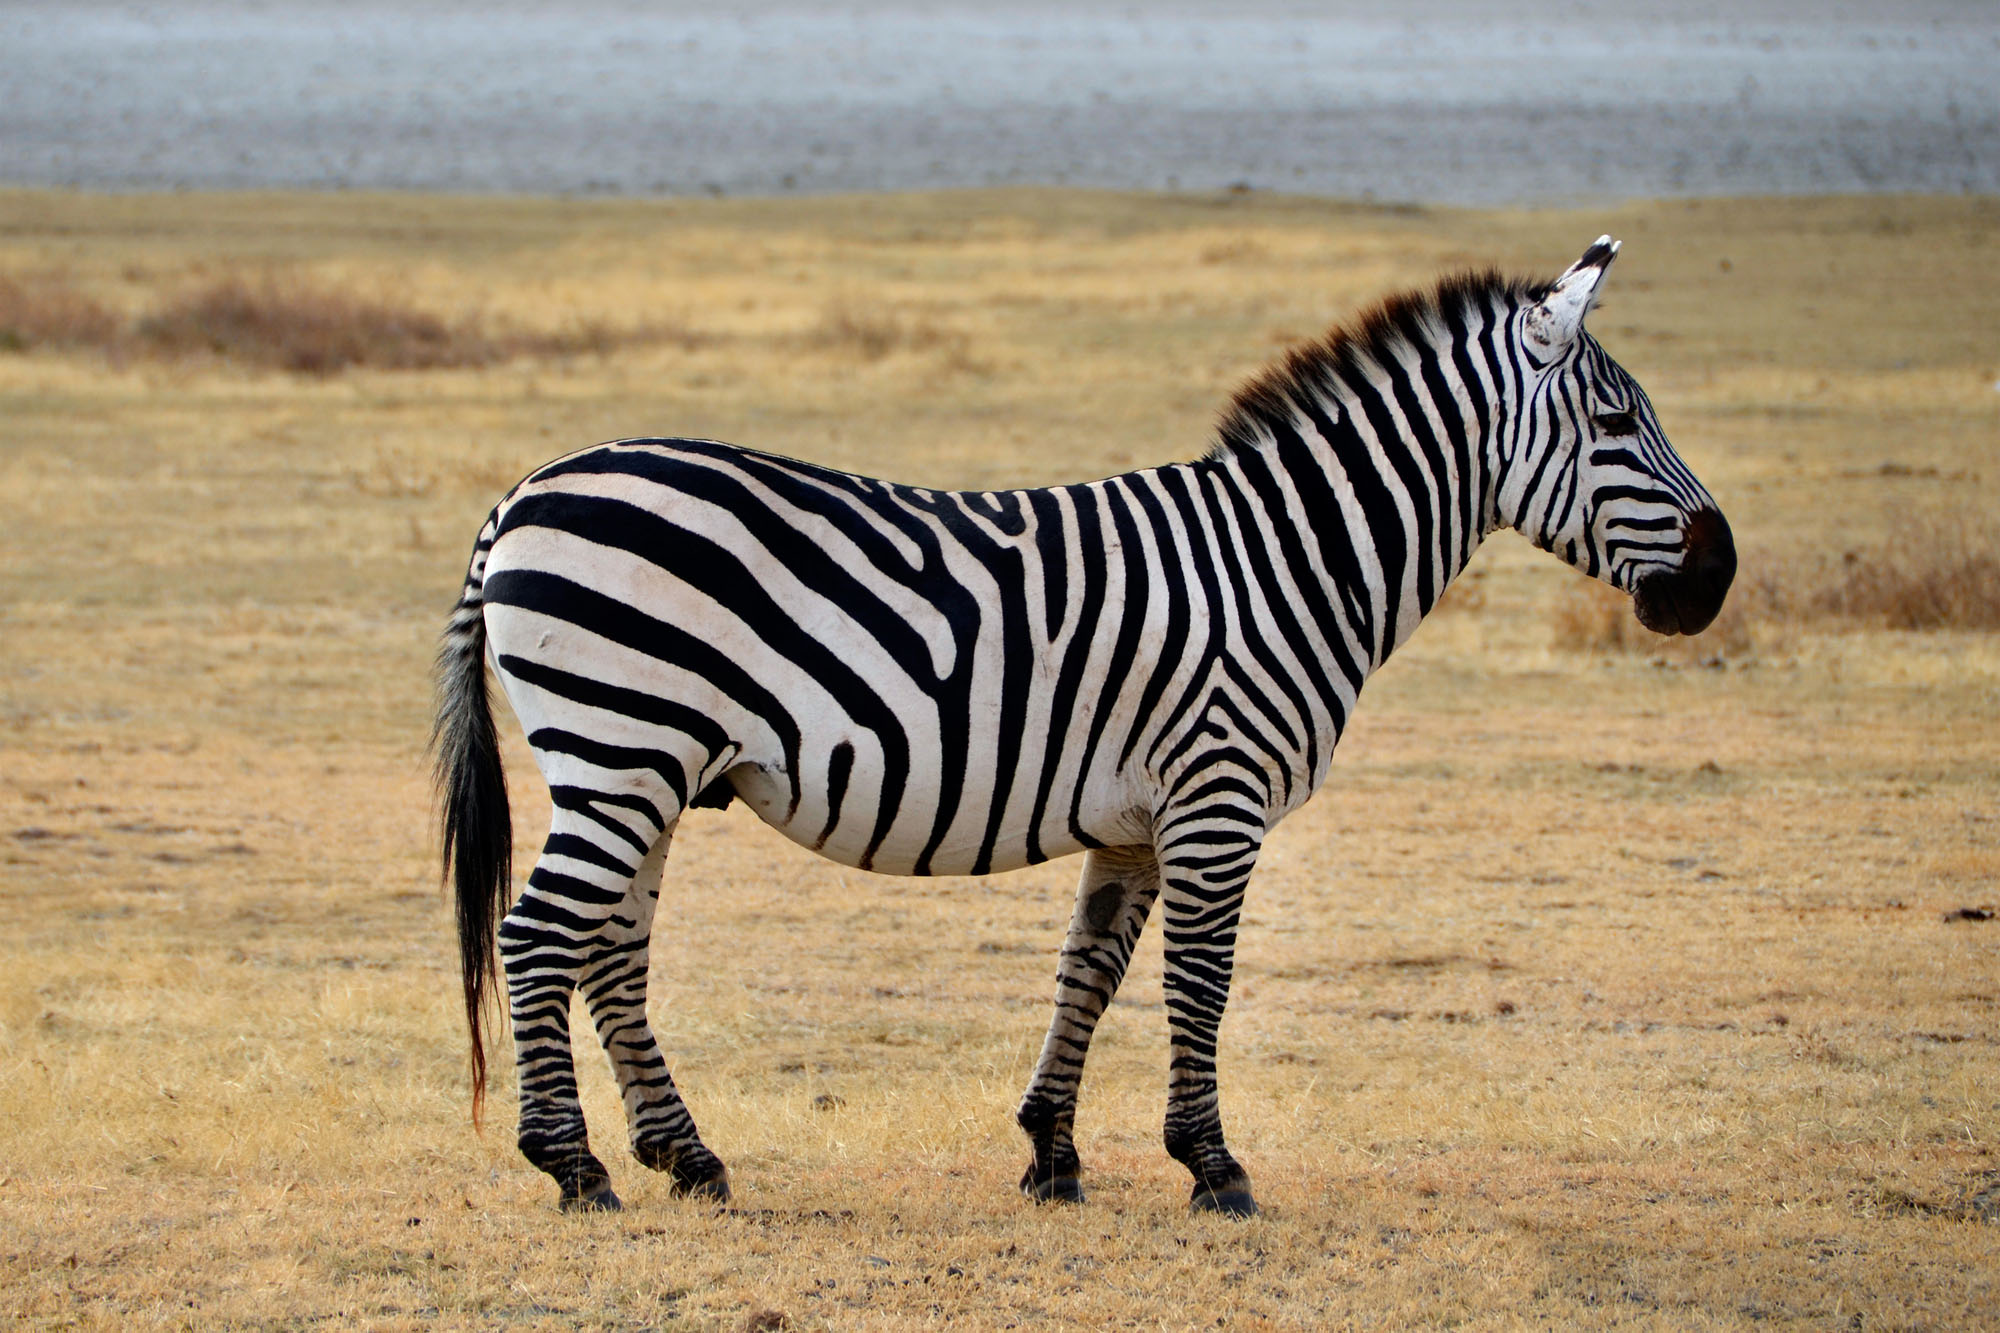 Safari -Zebra posing and curiously looking